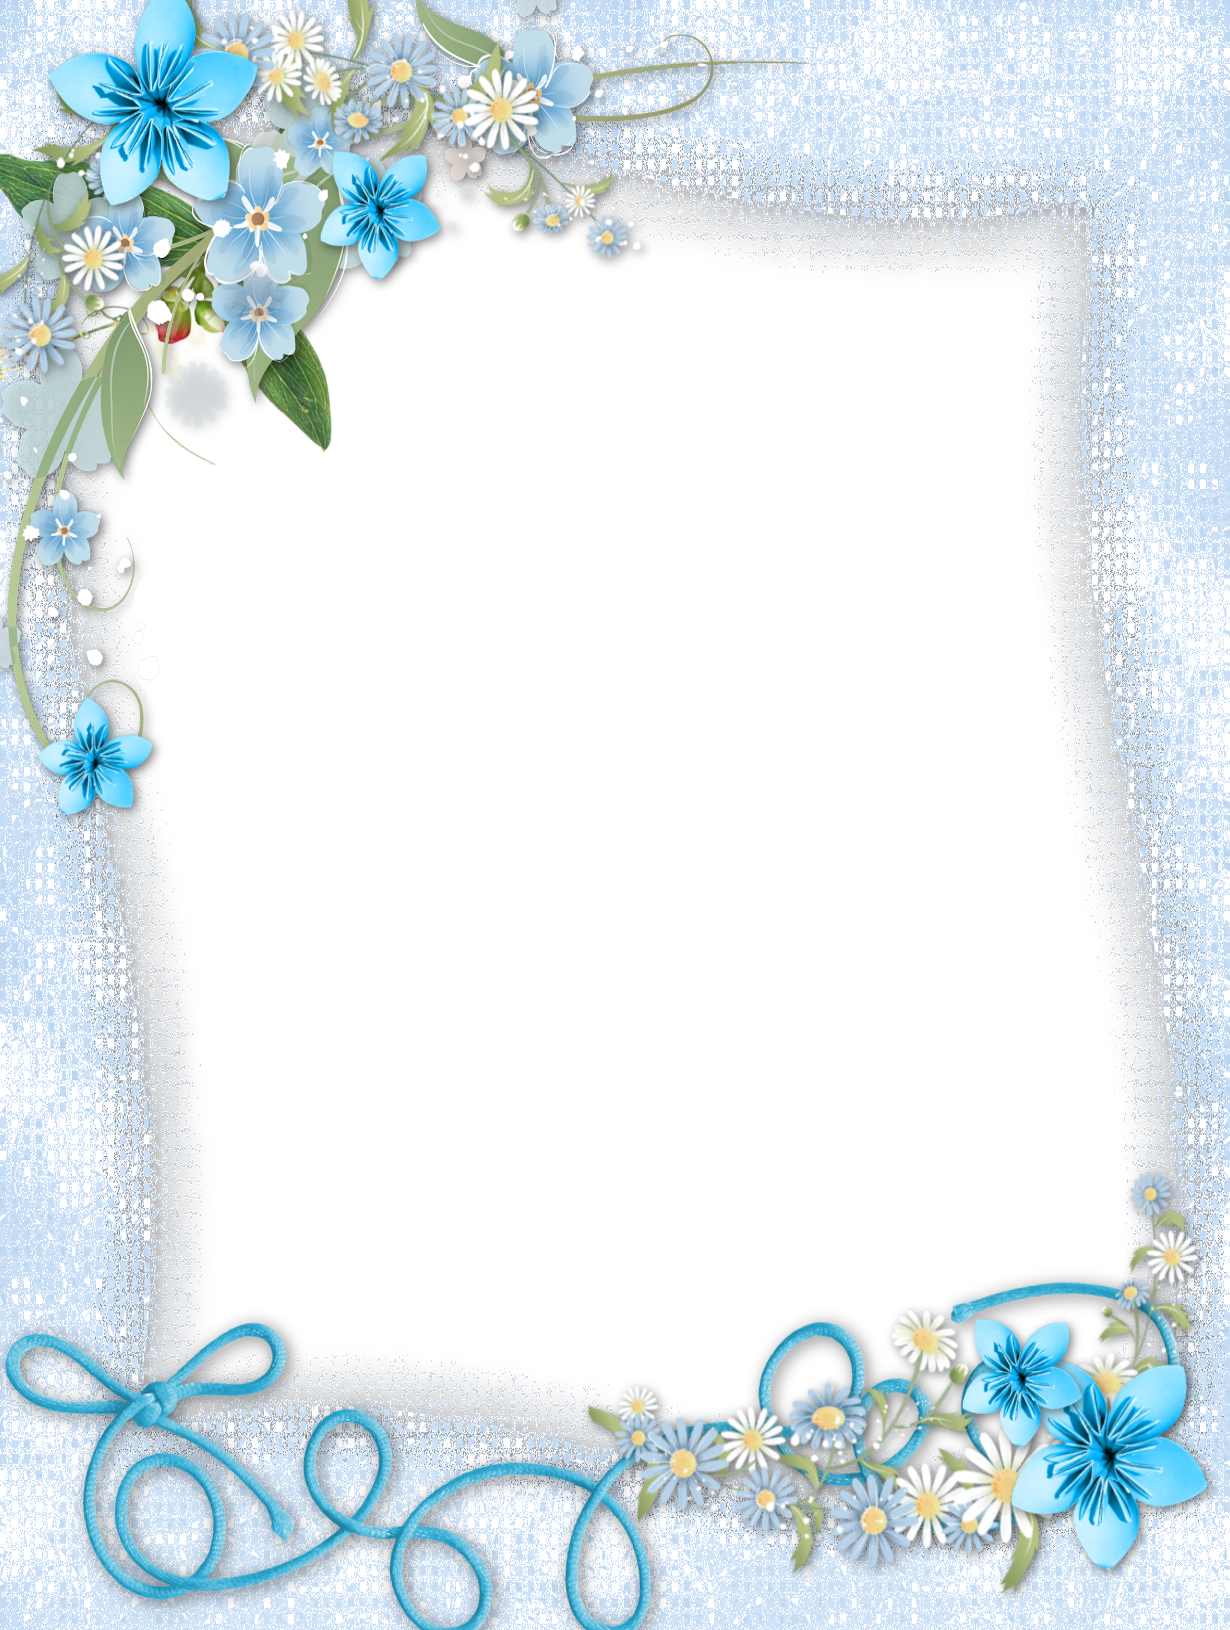 Transparent png frame with. Clipart border blue flower